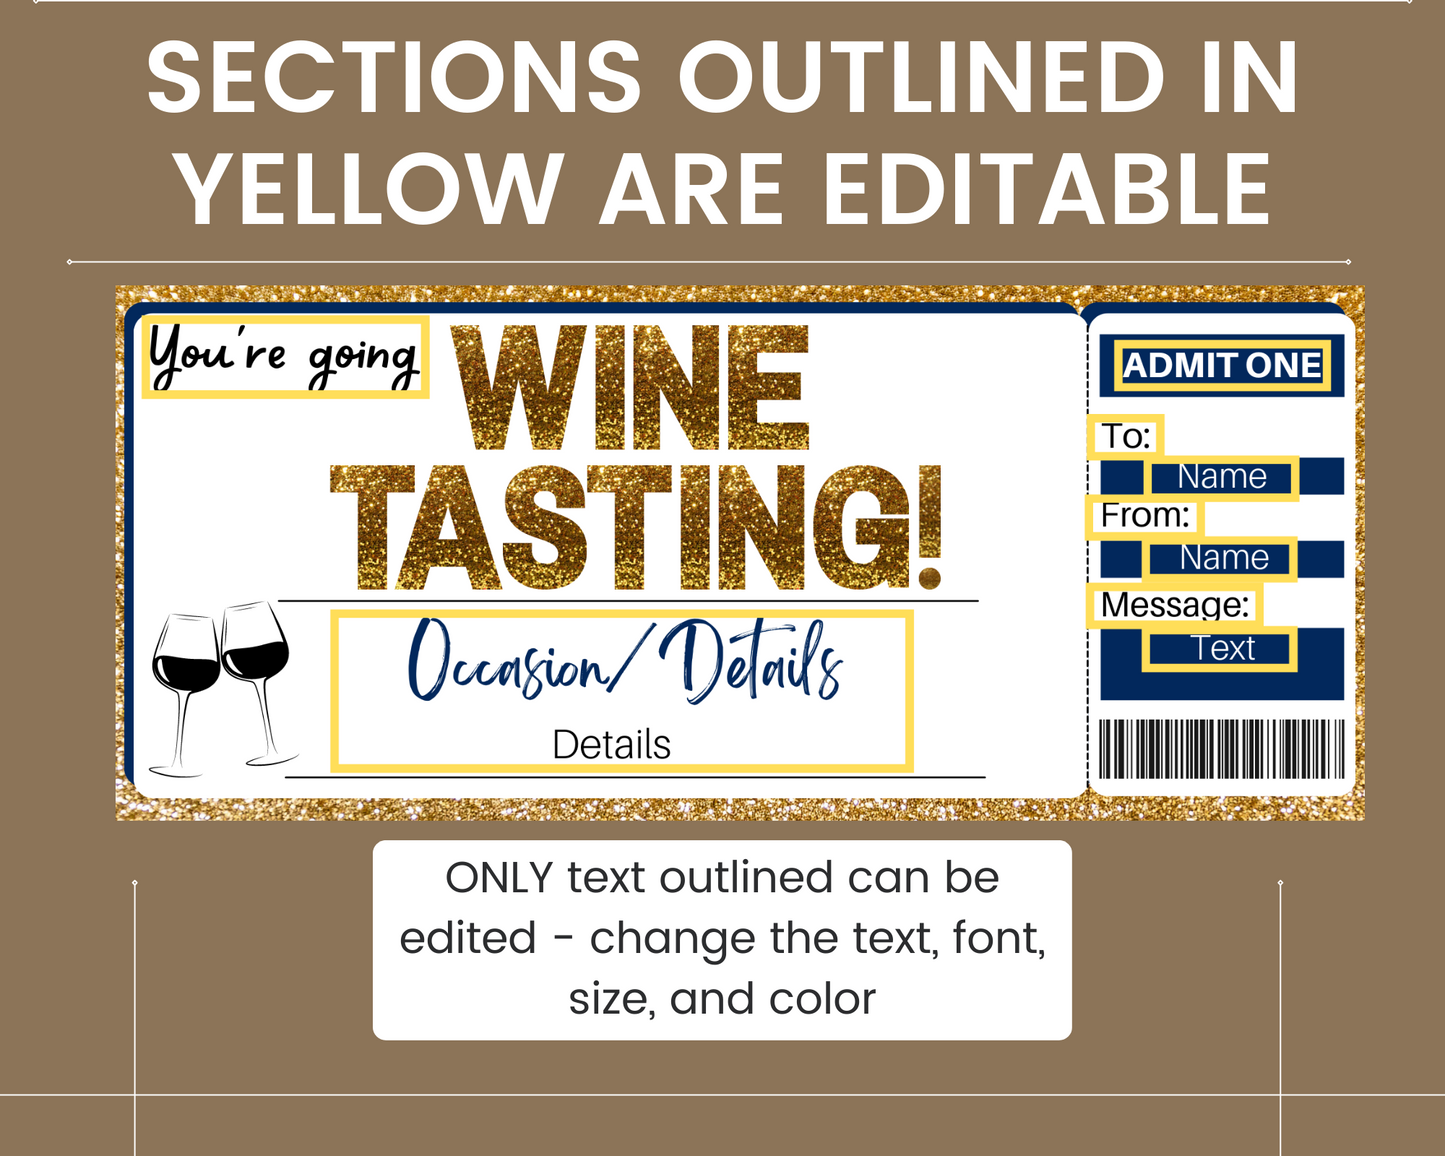 Wine Tasting Gift Certificate